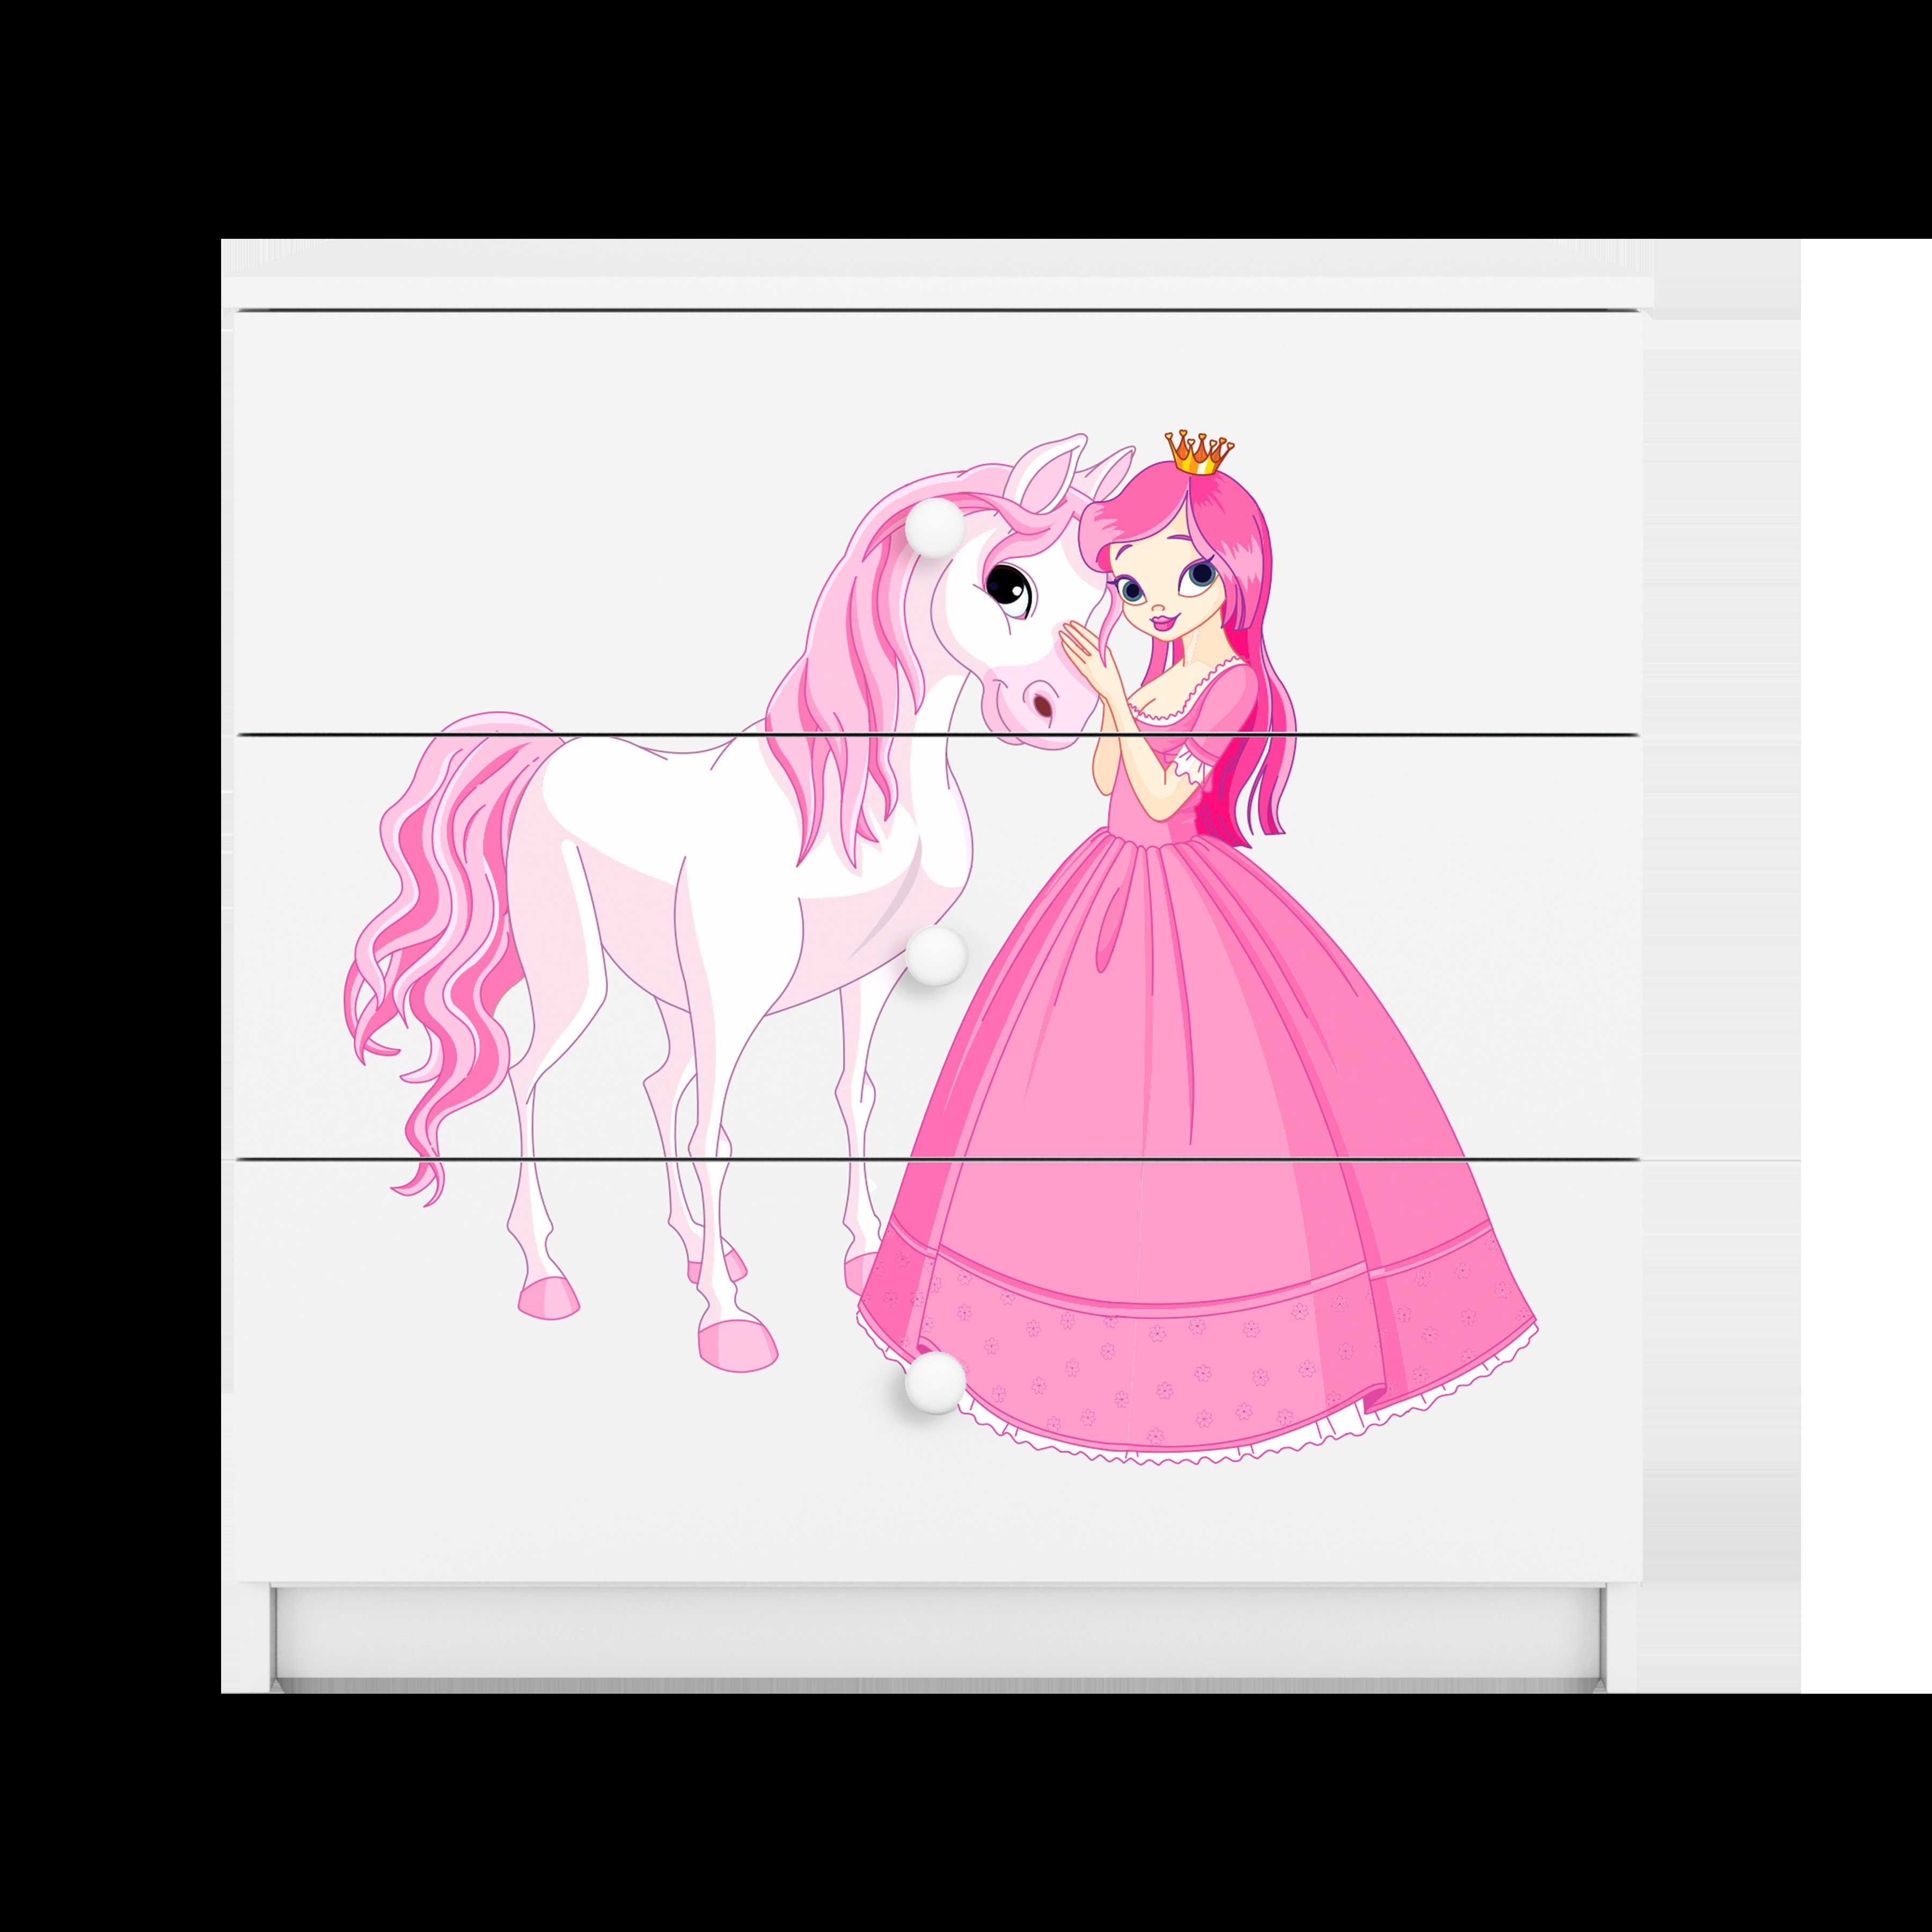 Komoda Babydreams - Princesė ir arklys, balta